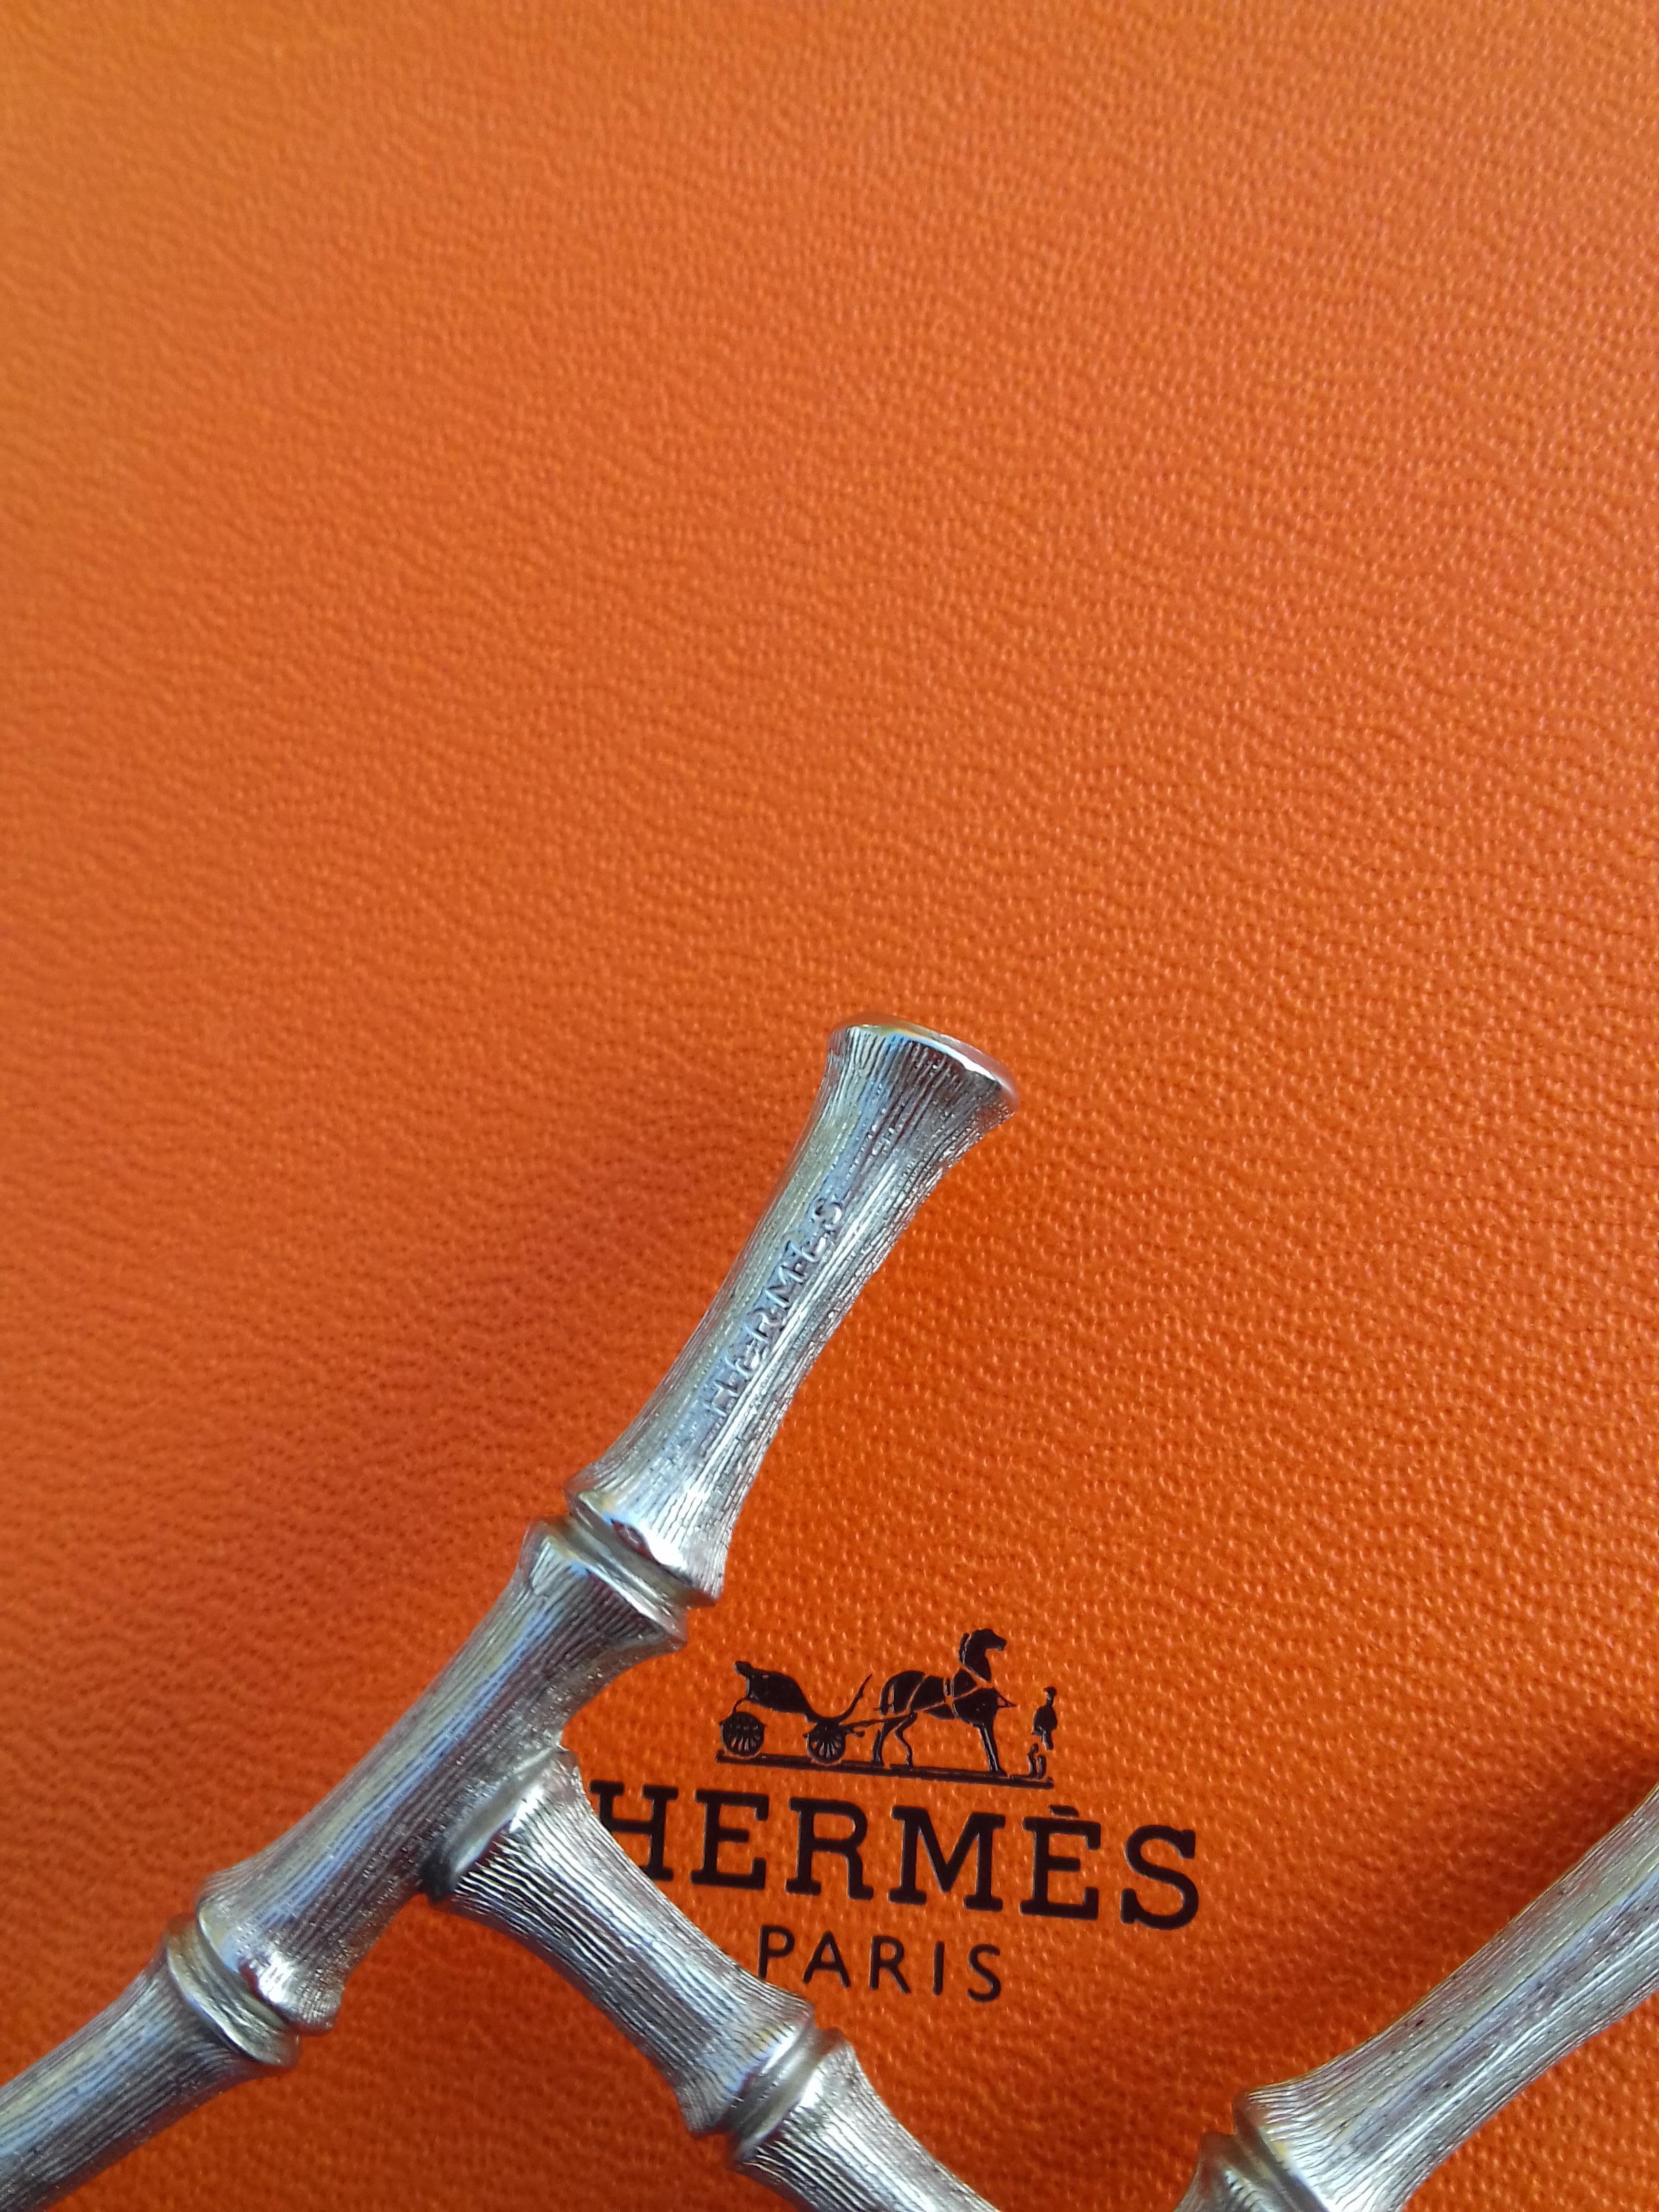 Hermès Paris Bambou Halter Necklace for scarf Collier Brown Leather RARE 10